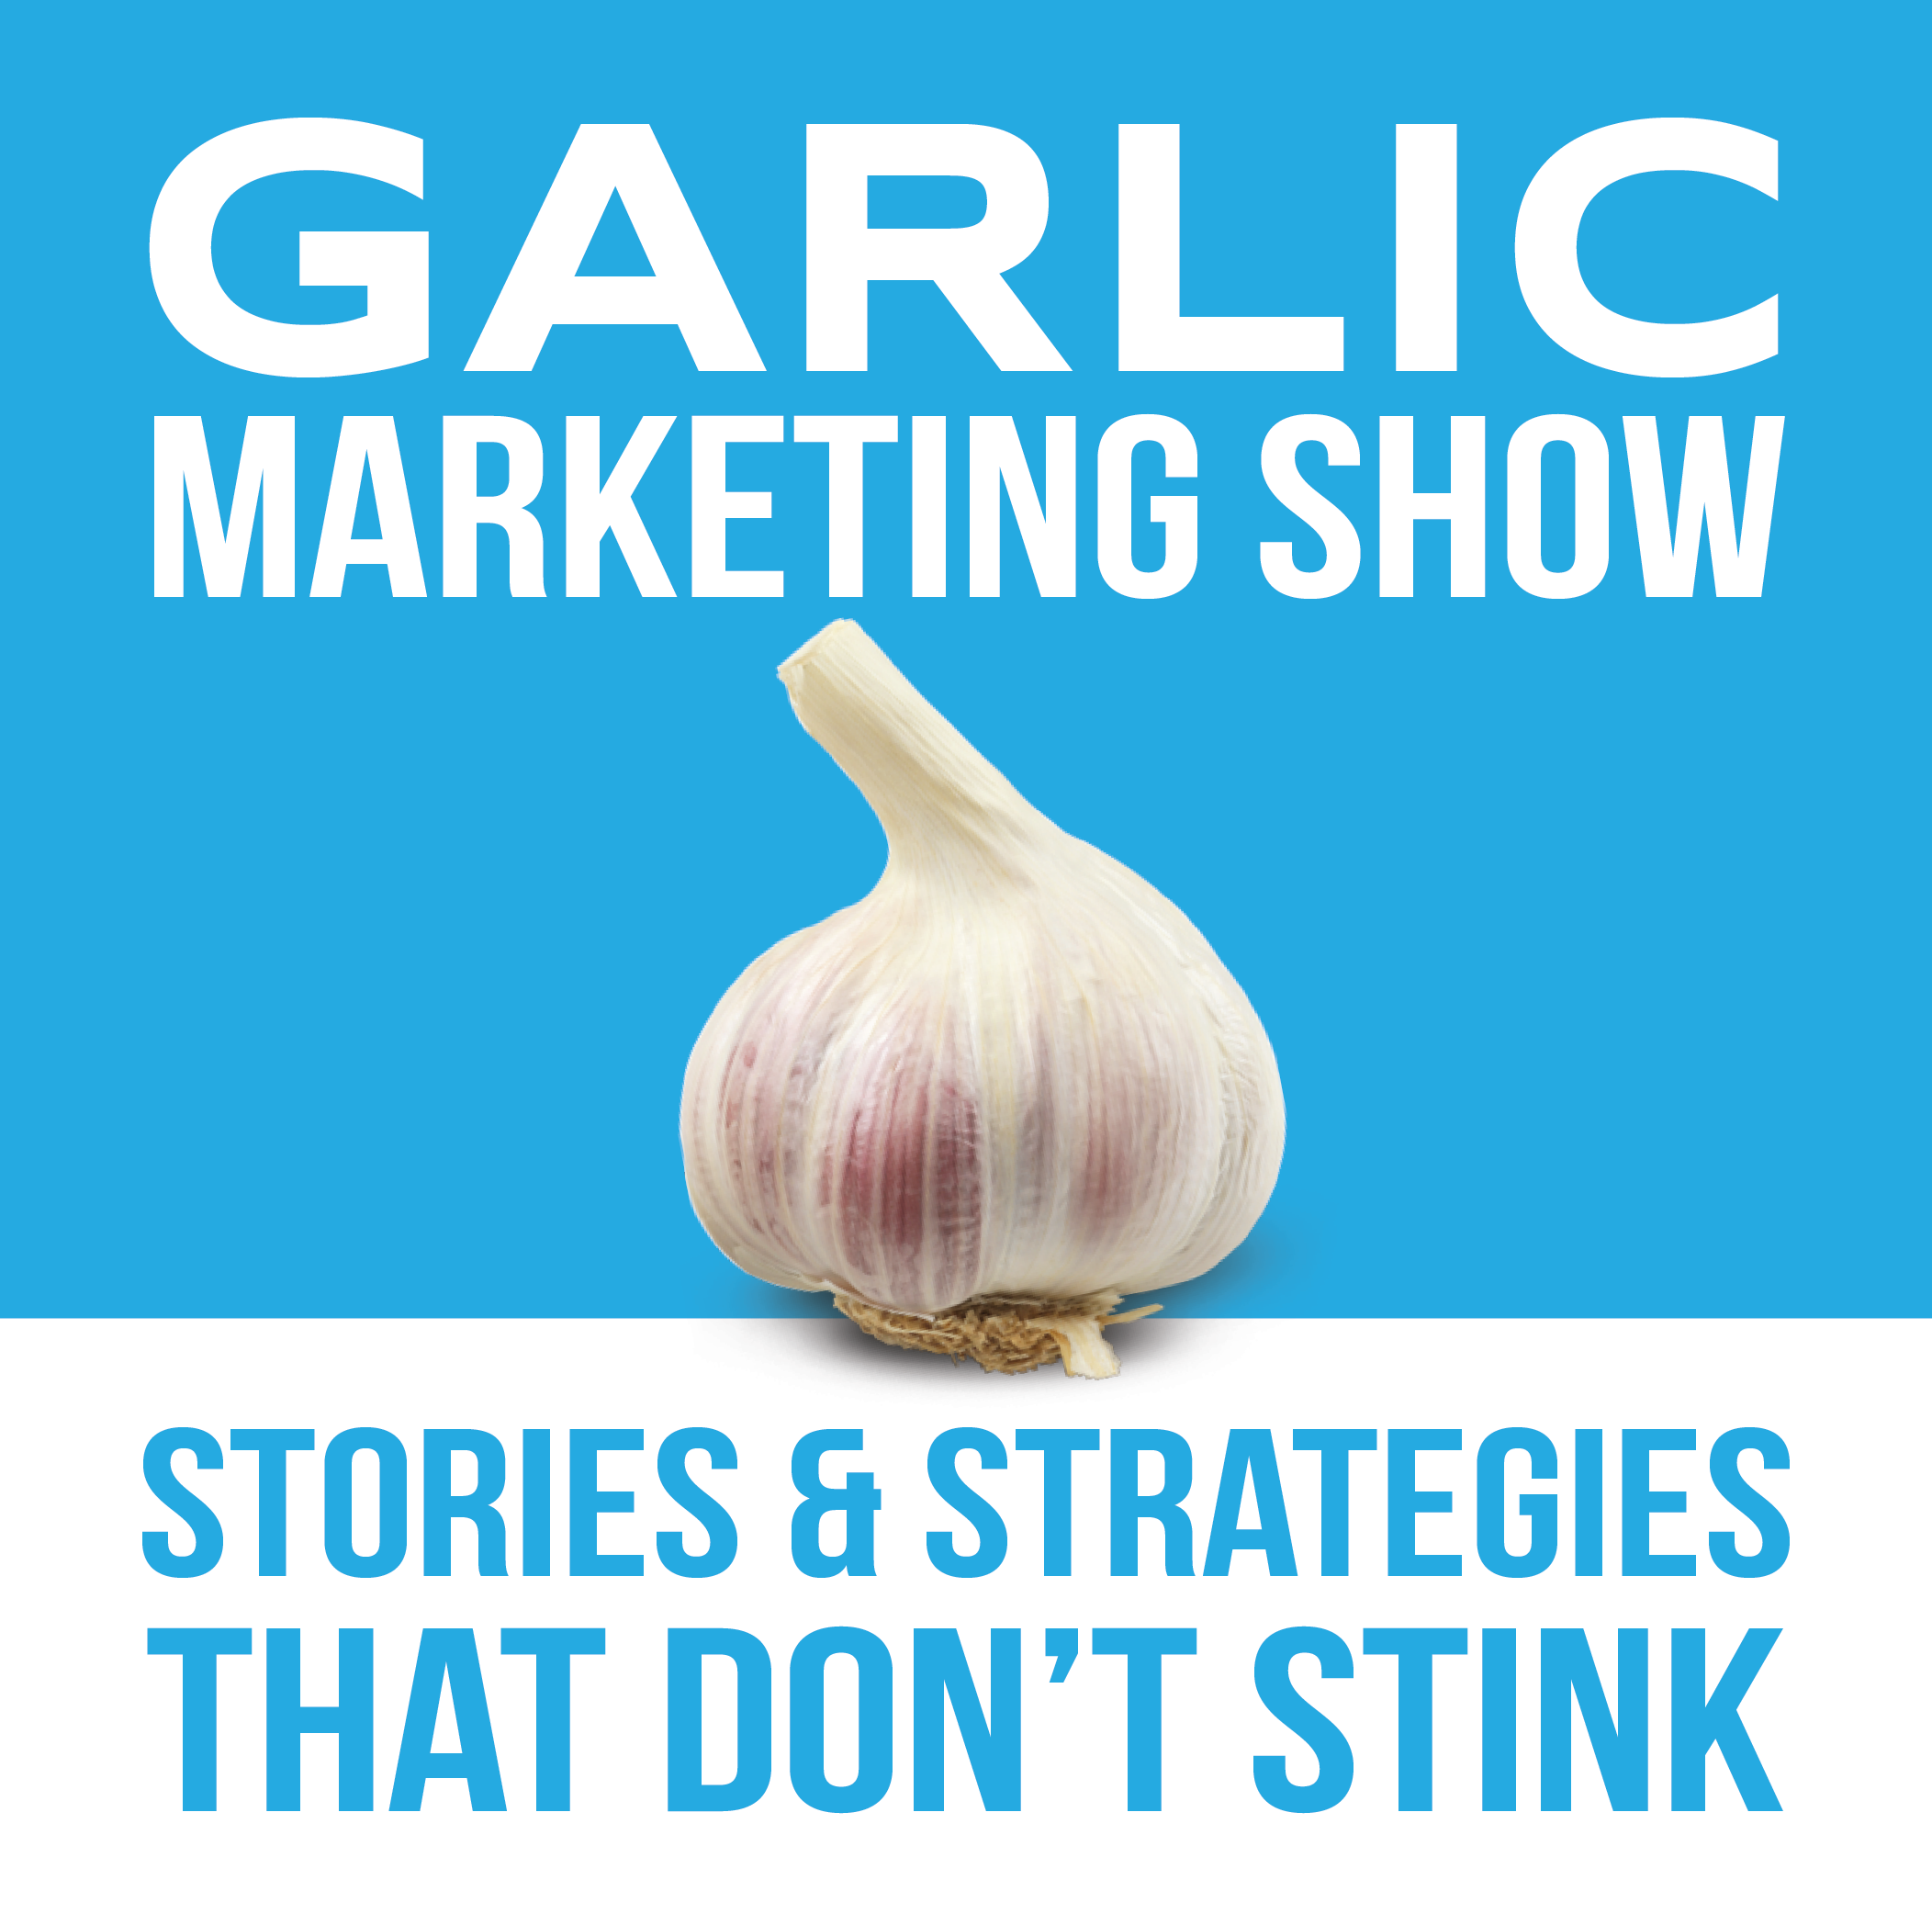 The Garlic Marketing Show